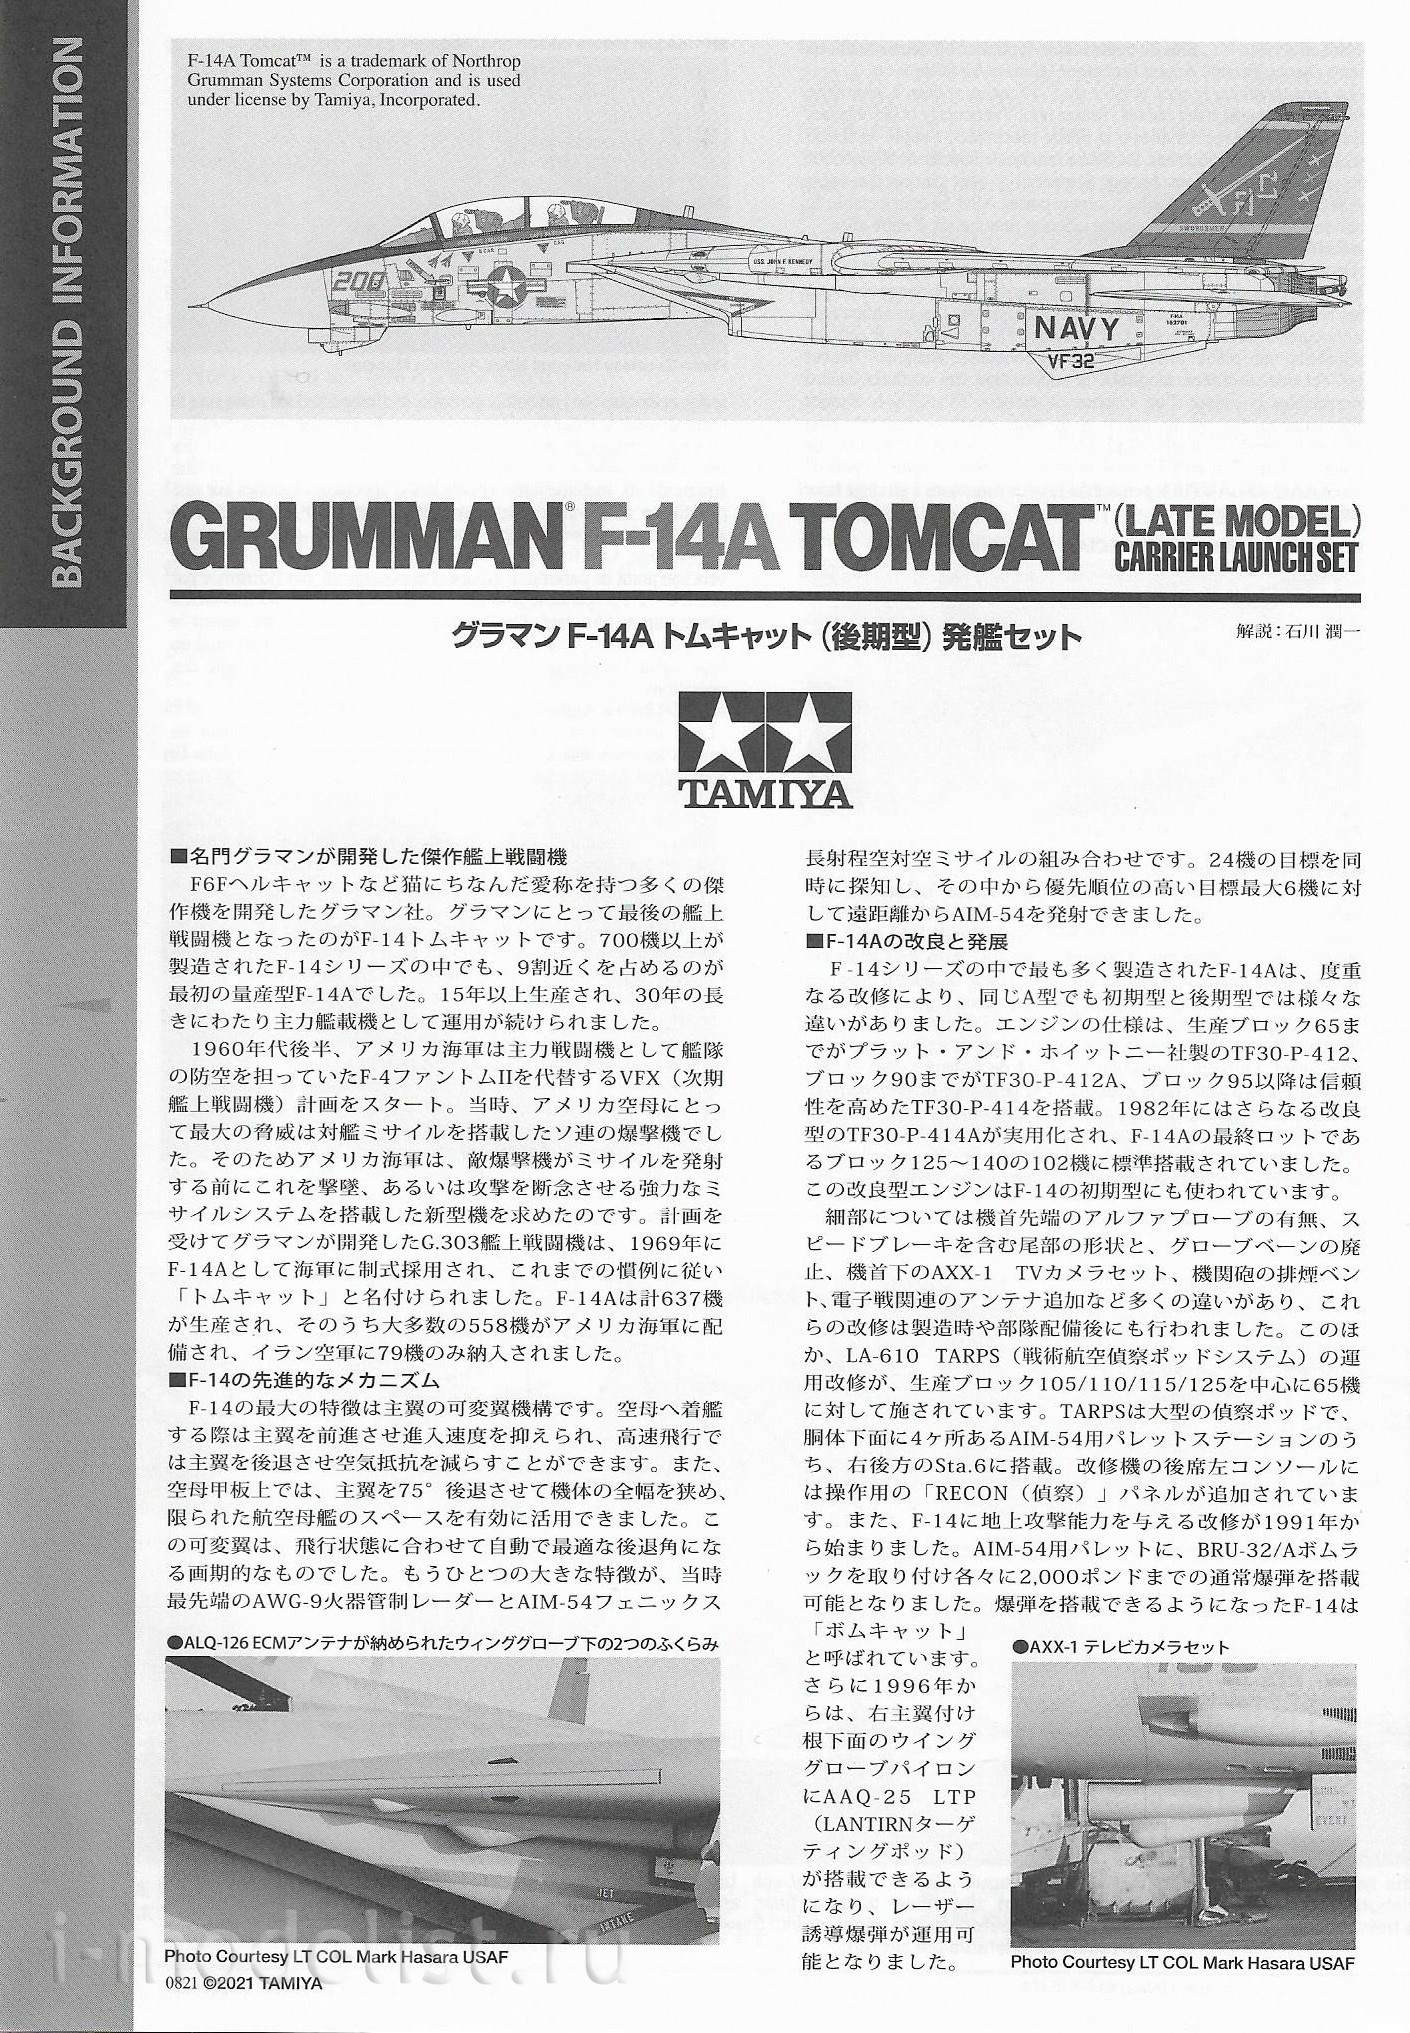 61122 Tamiya 1/48 Grumman F-14A Tomcat Aircraft (late)